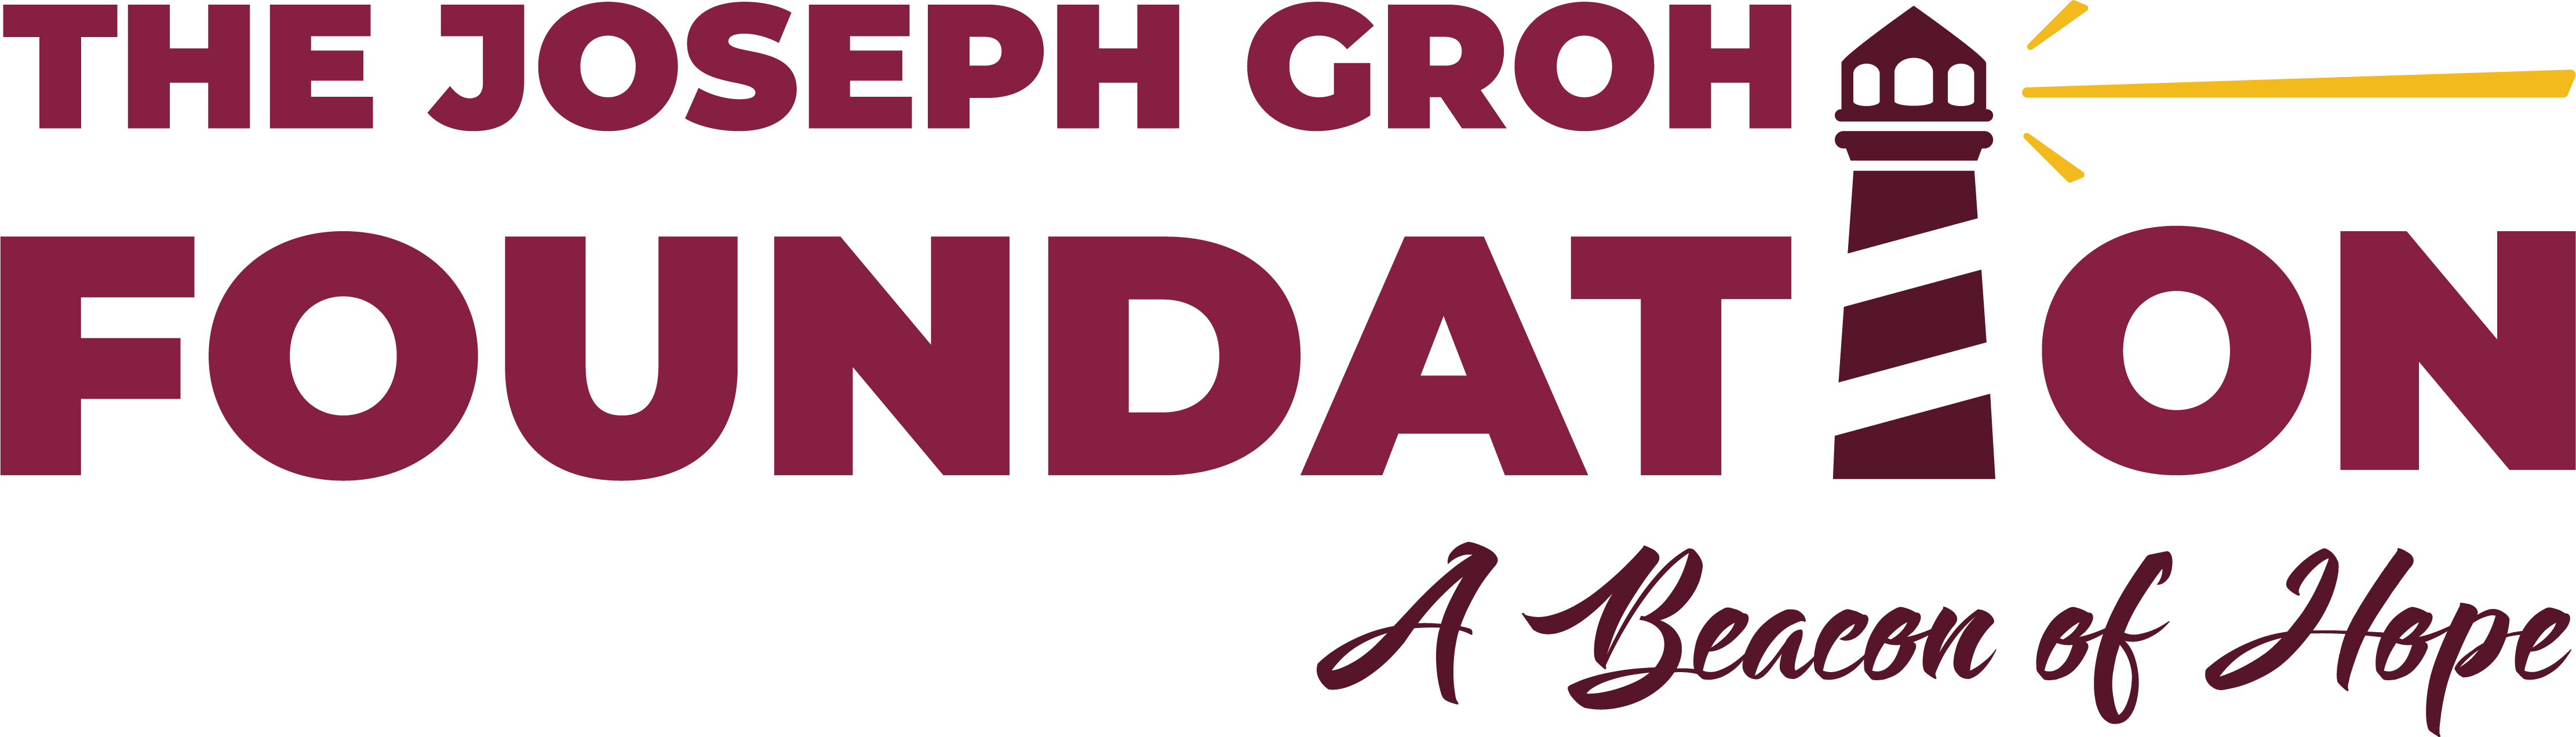 Joseph Groh Foundation